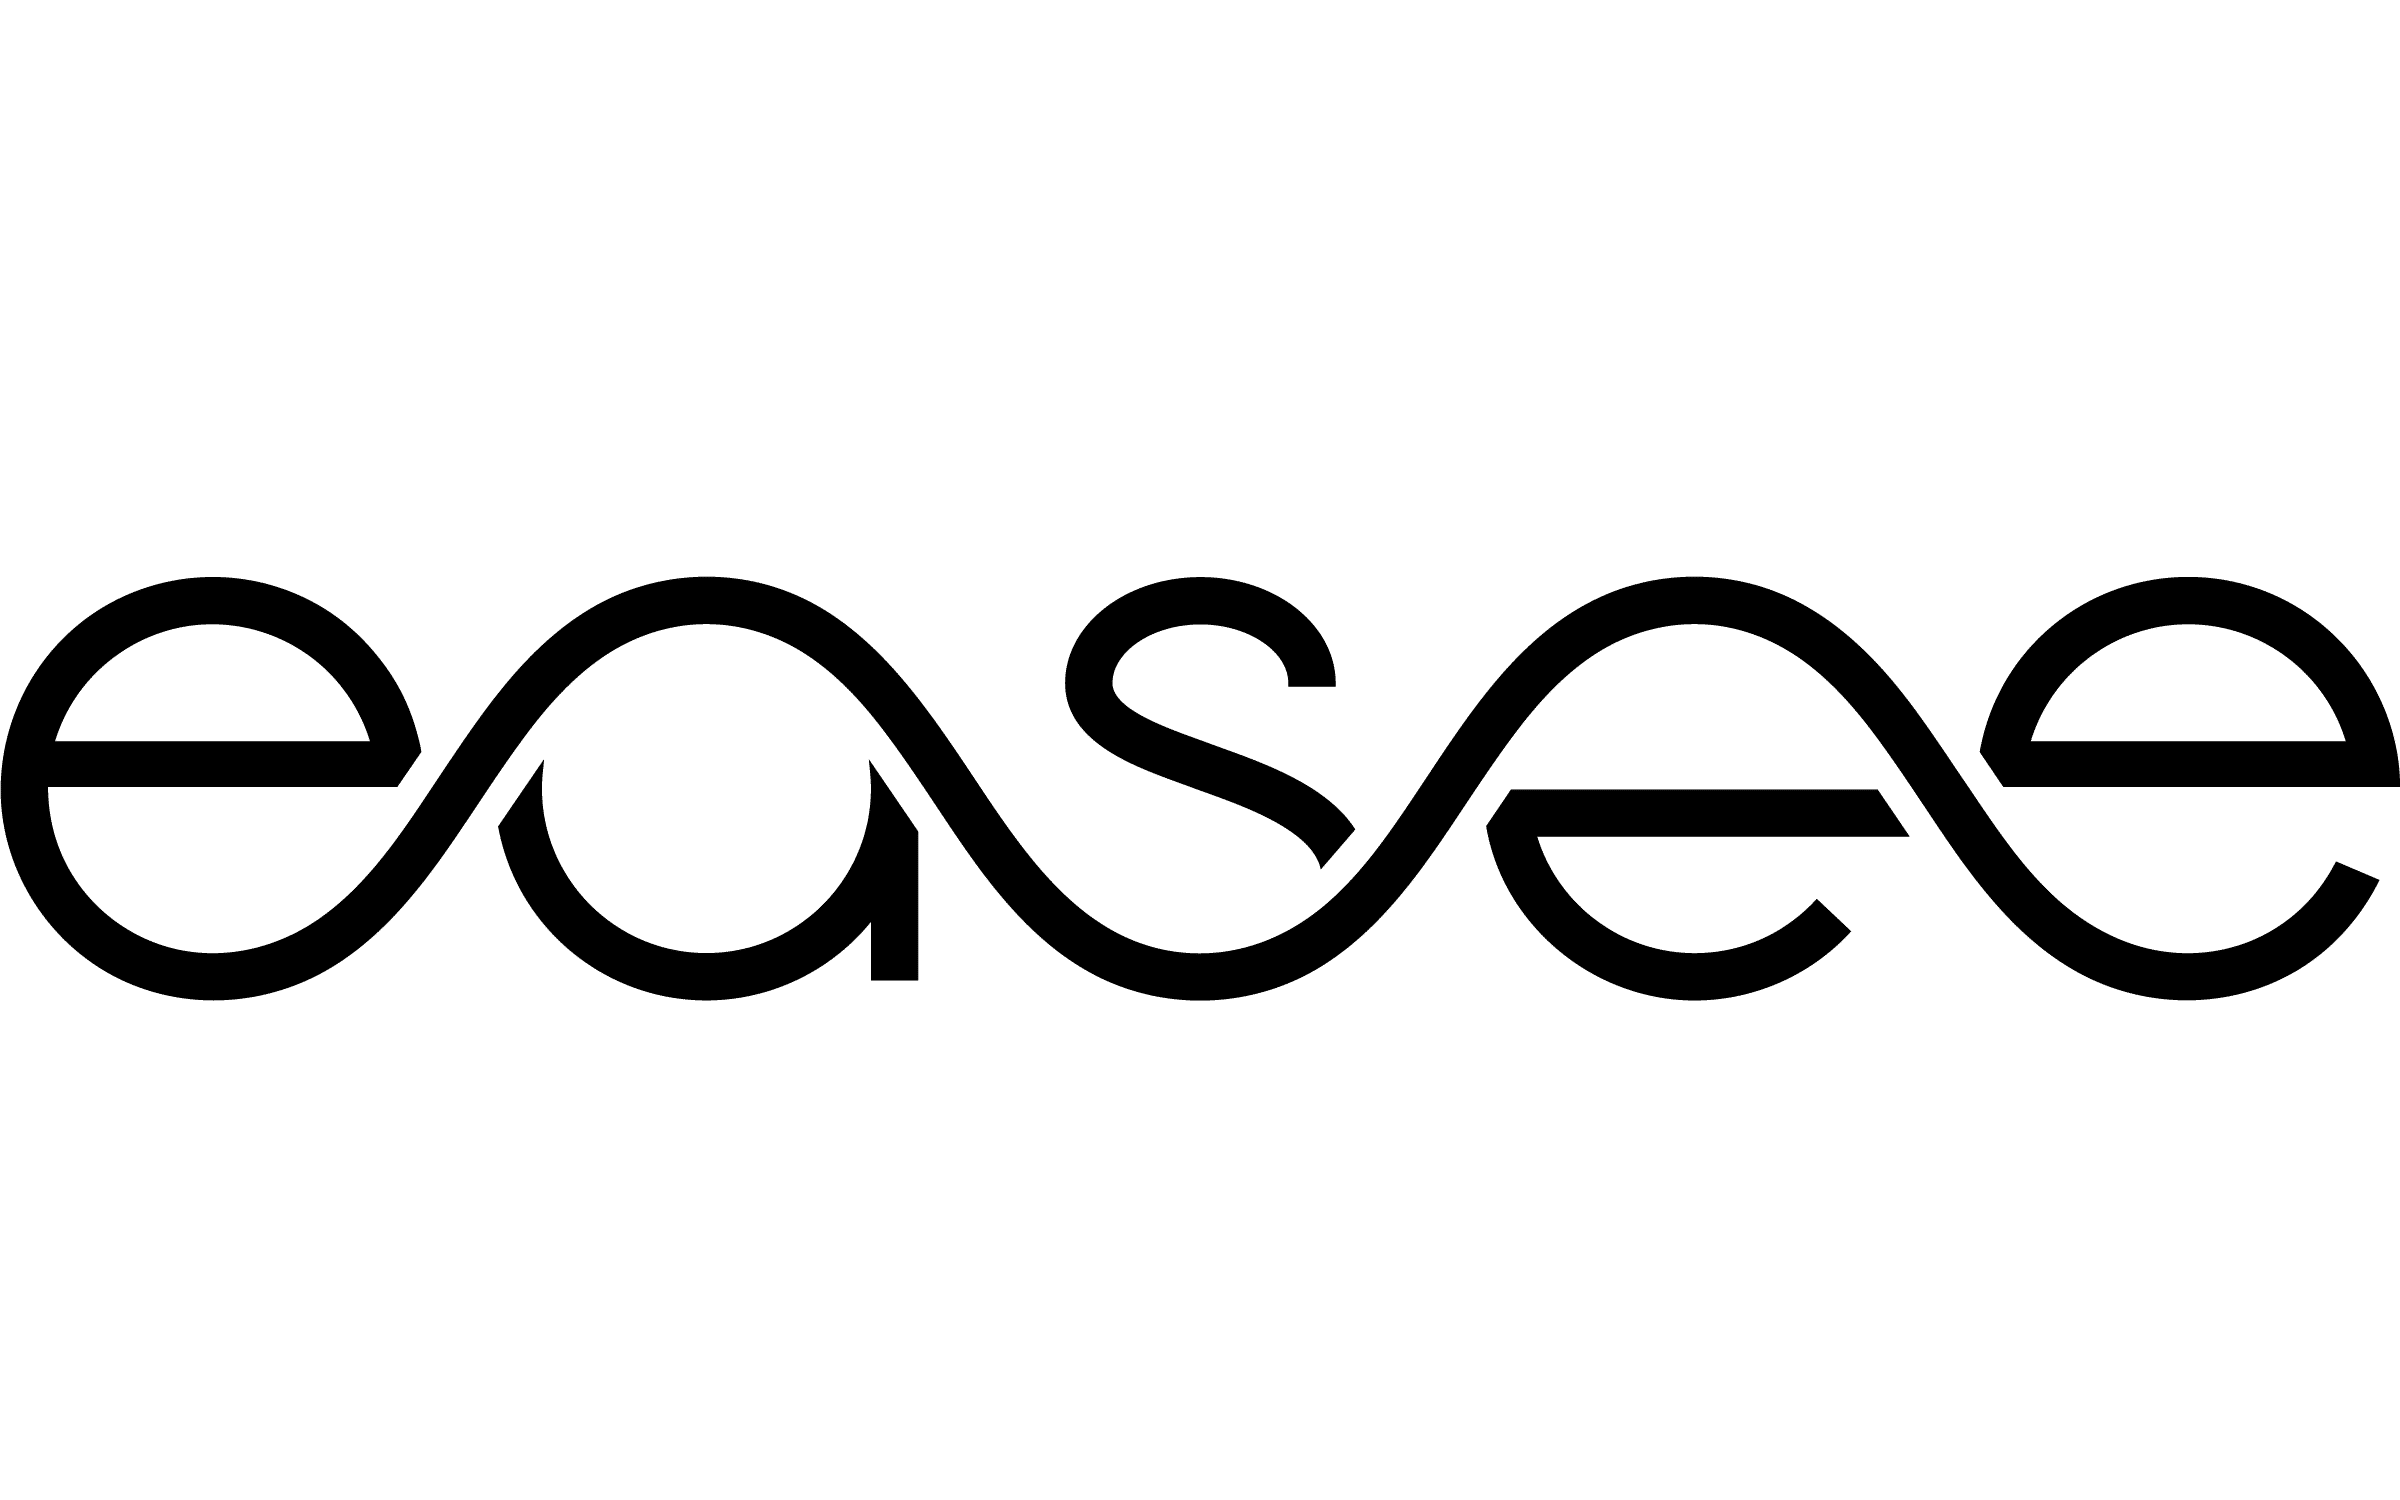 EASEE Logo